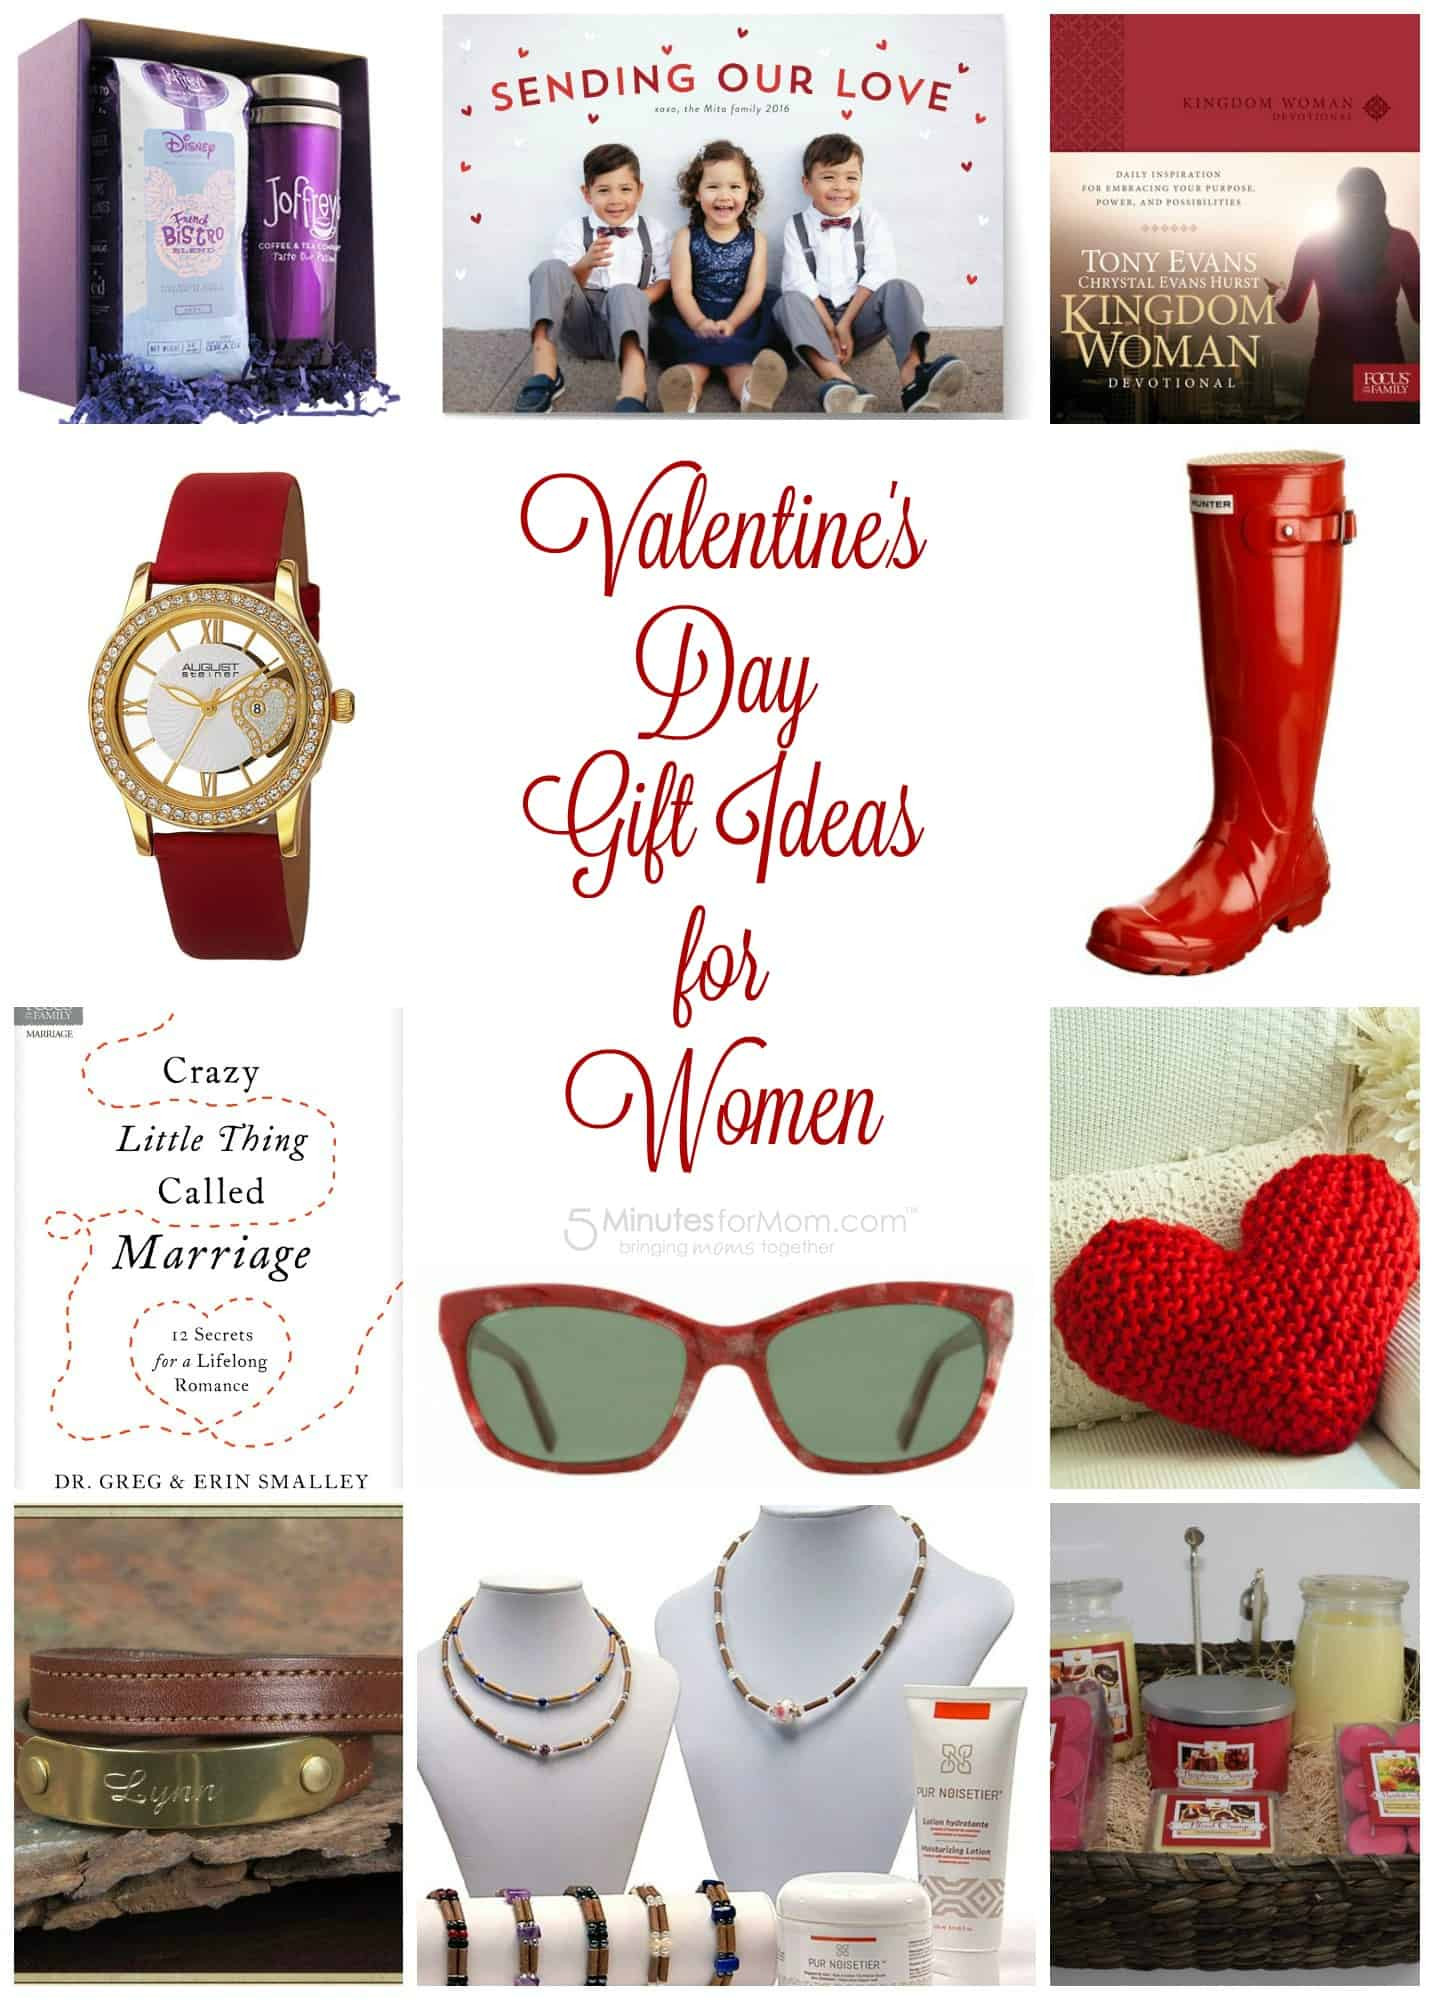 Valentine Day Gift Ideas for Women Elegant Valentine S Day Gift Guide for Women Plus $100 Amazon